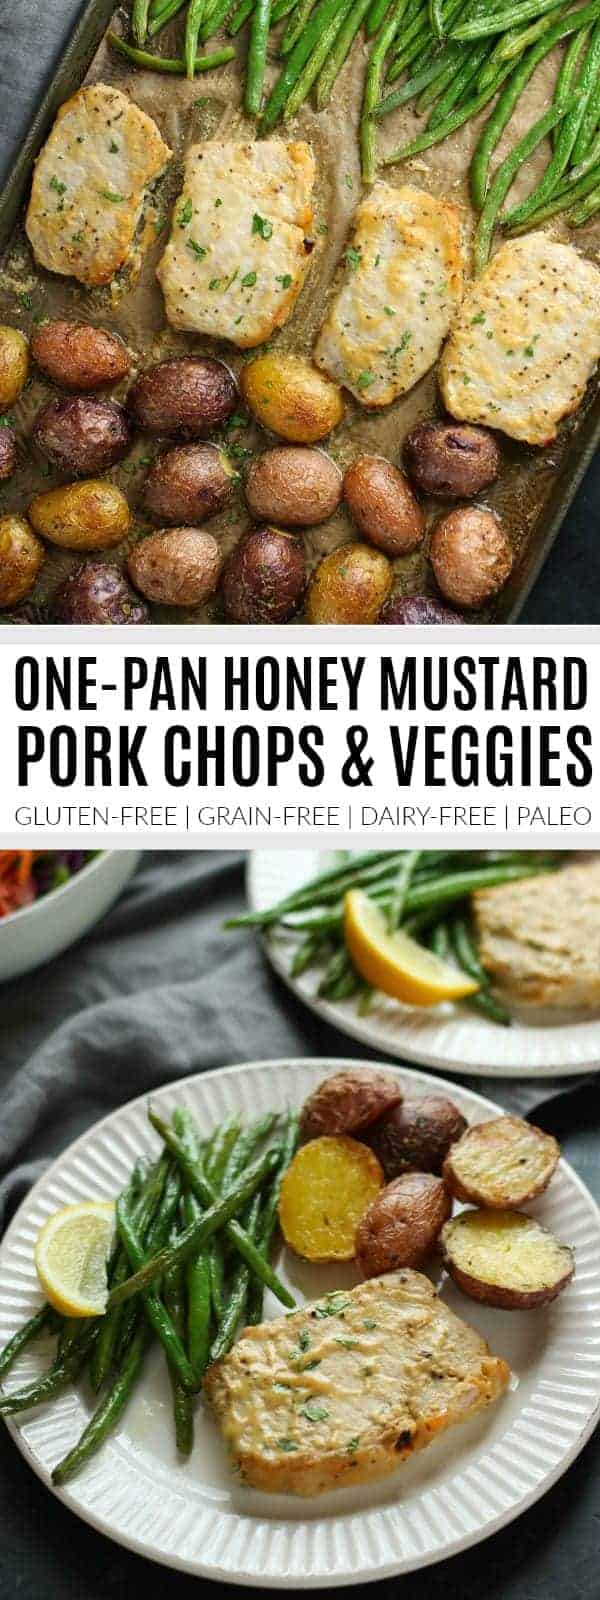 Pinterest image for one-pan honey mustard pork chops and veggies